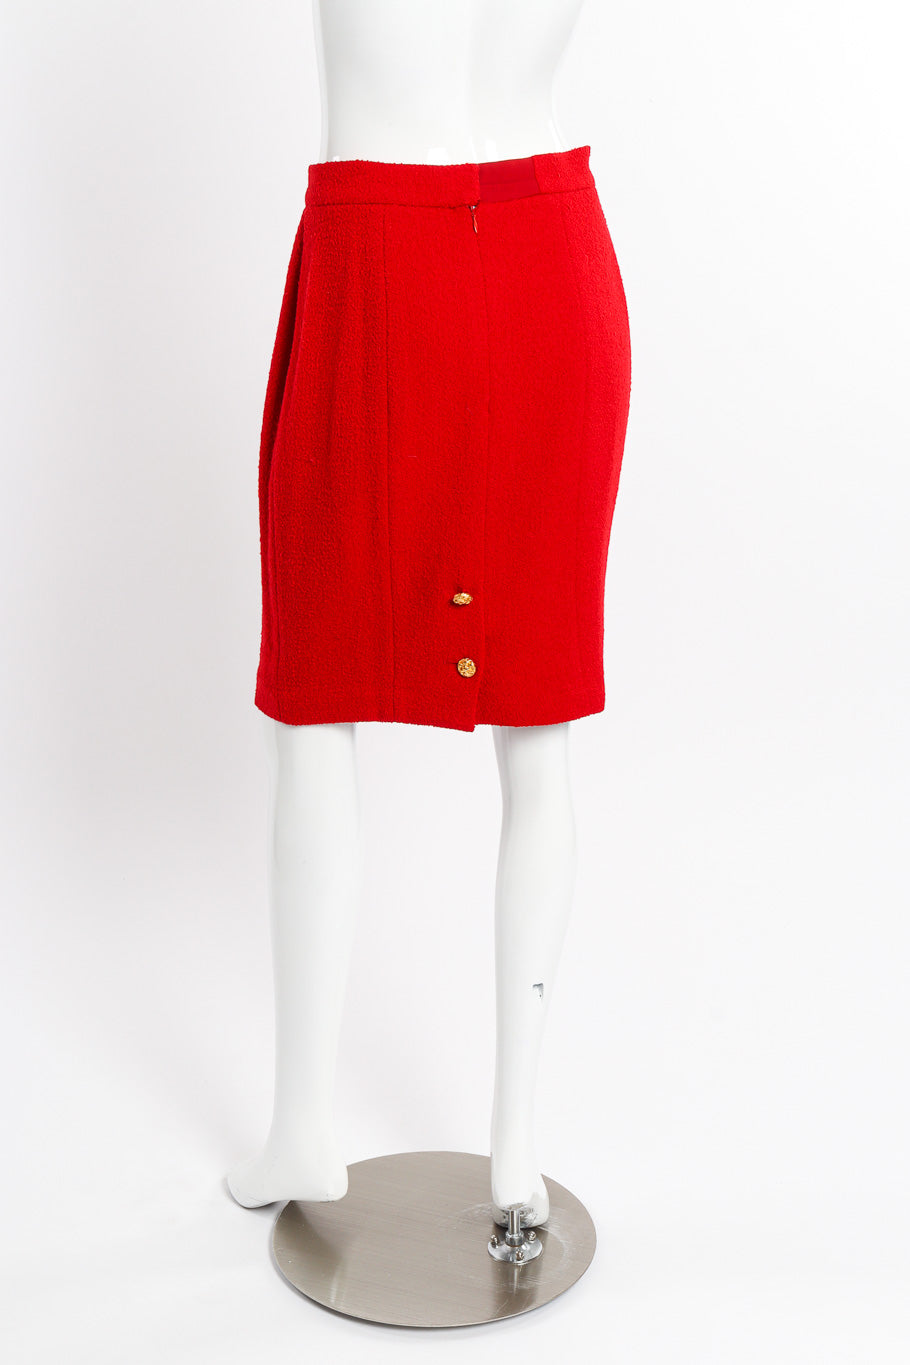 Vintage Chanel 1992 F/W Bouclé Long Jacket And Skirt Set skirt back view on mannequin @recessla